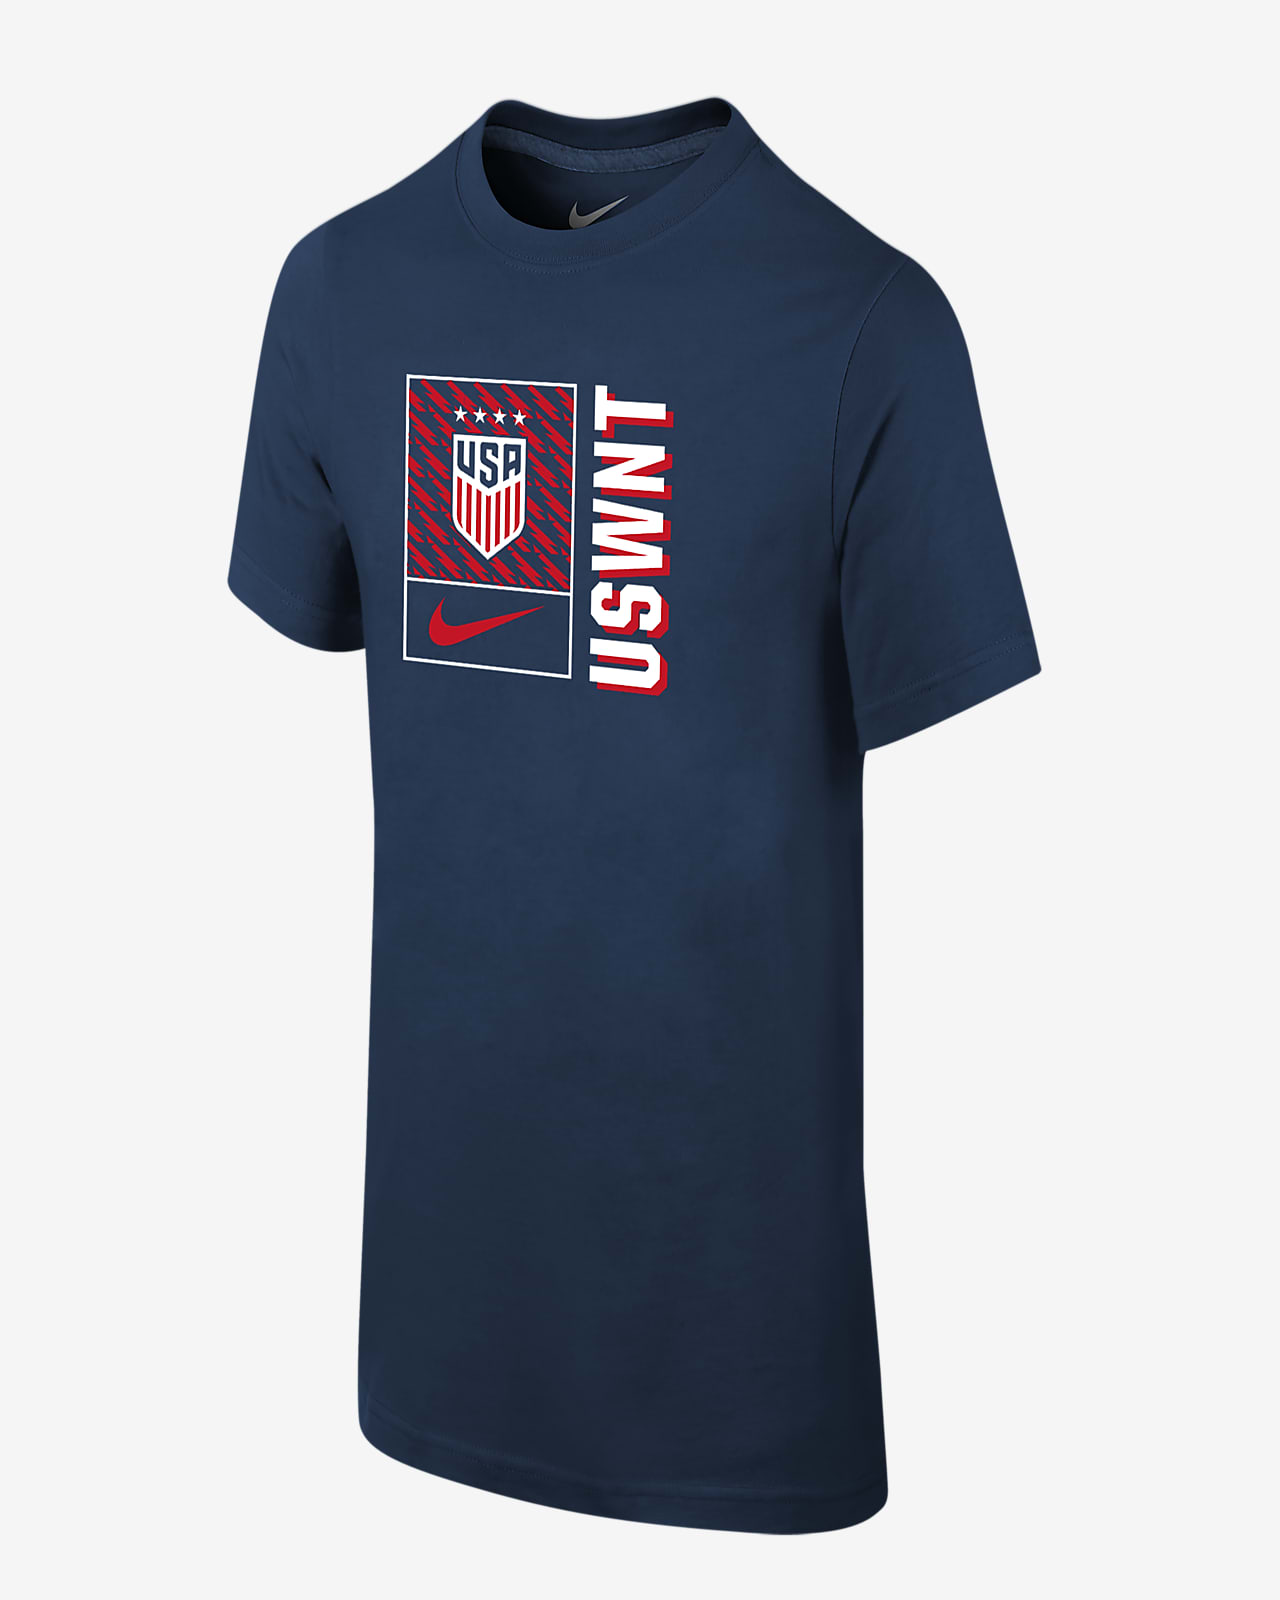 USWNT Big Kids' (Boys') Nike Soccer T-Shirt